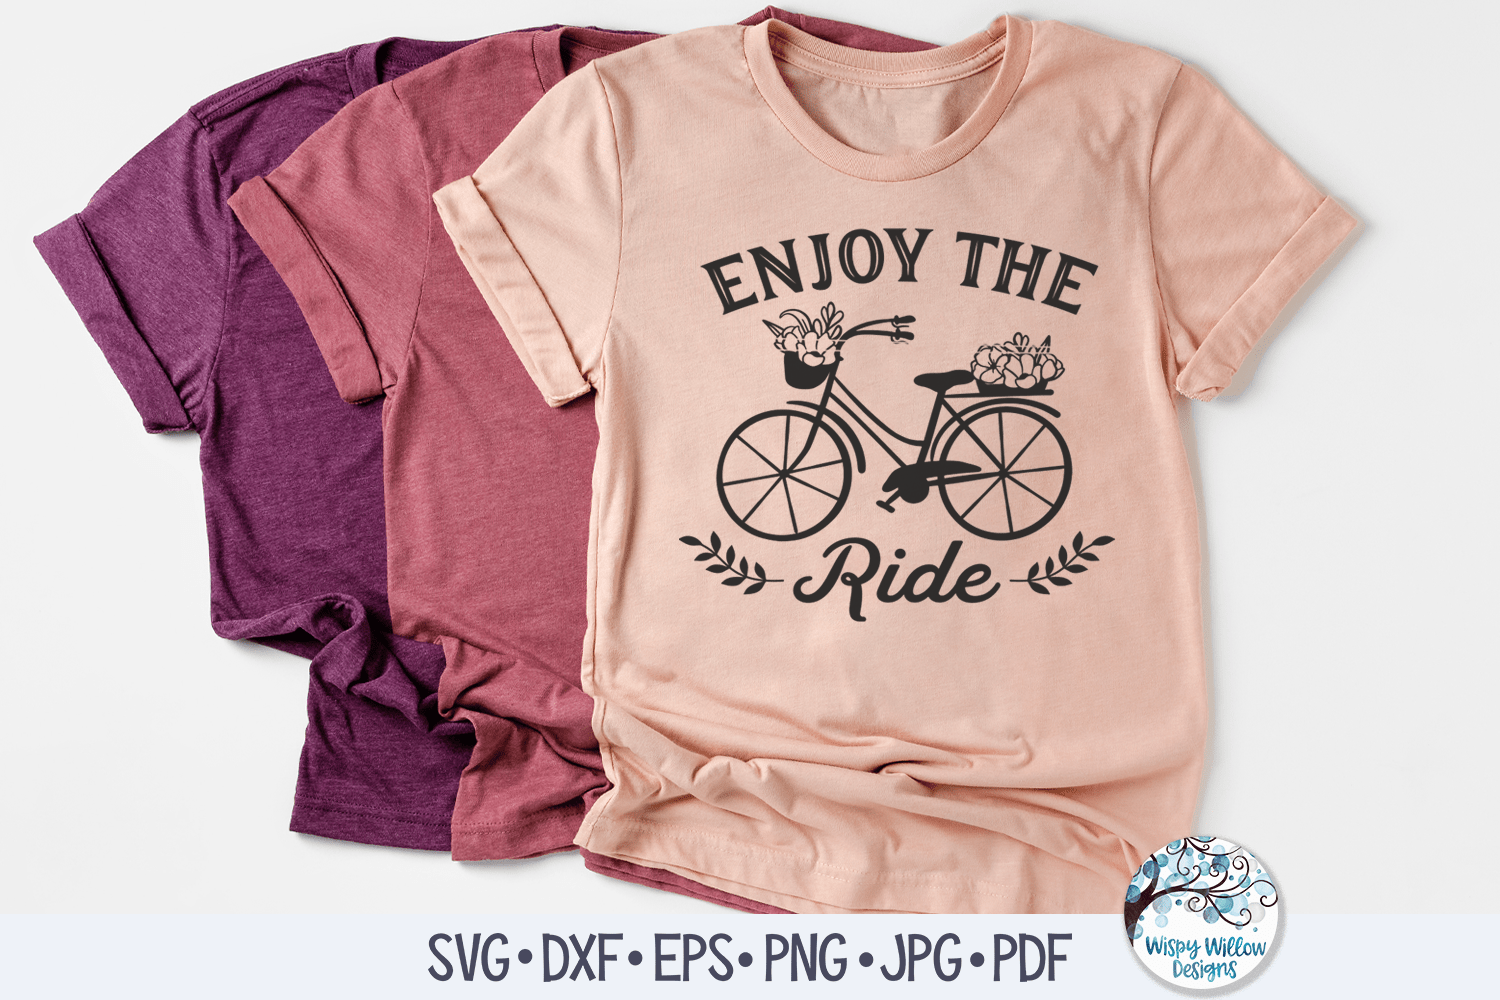 Enjoy The Ride SVG Wispy Willow Designs Company